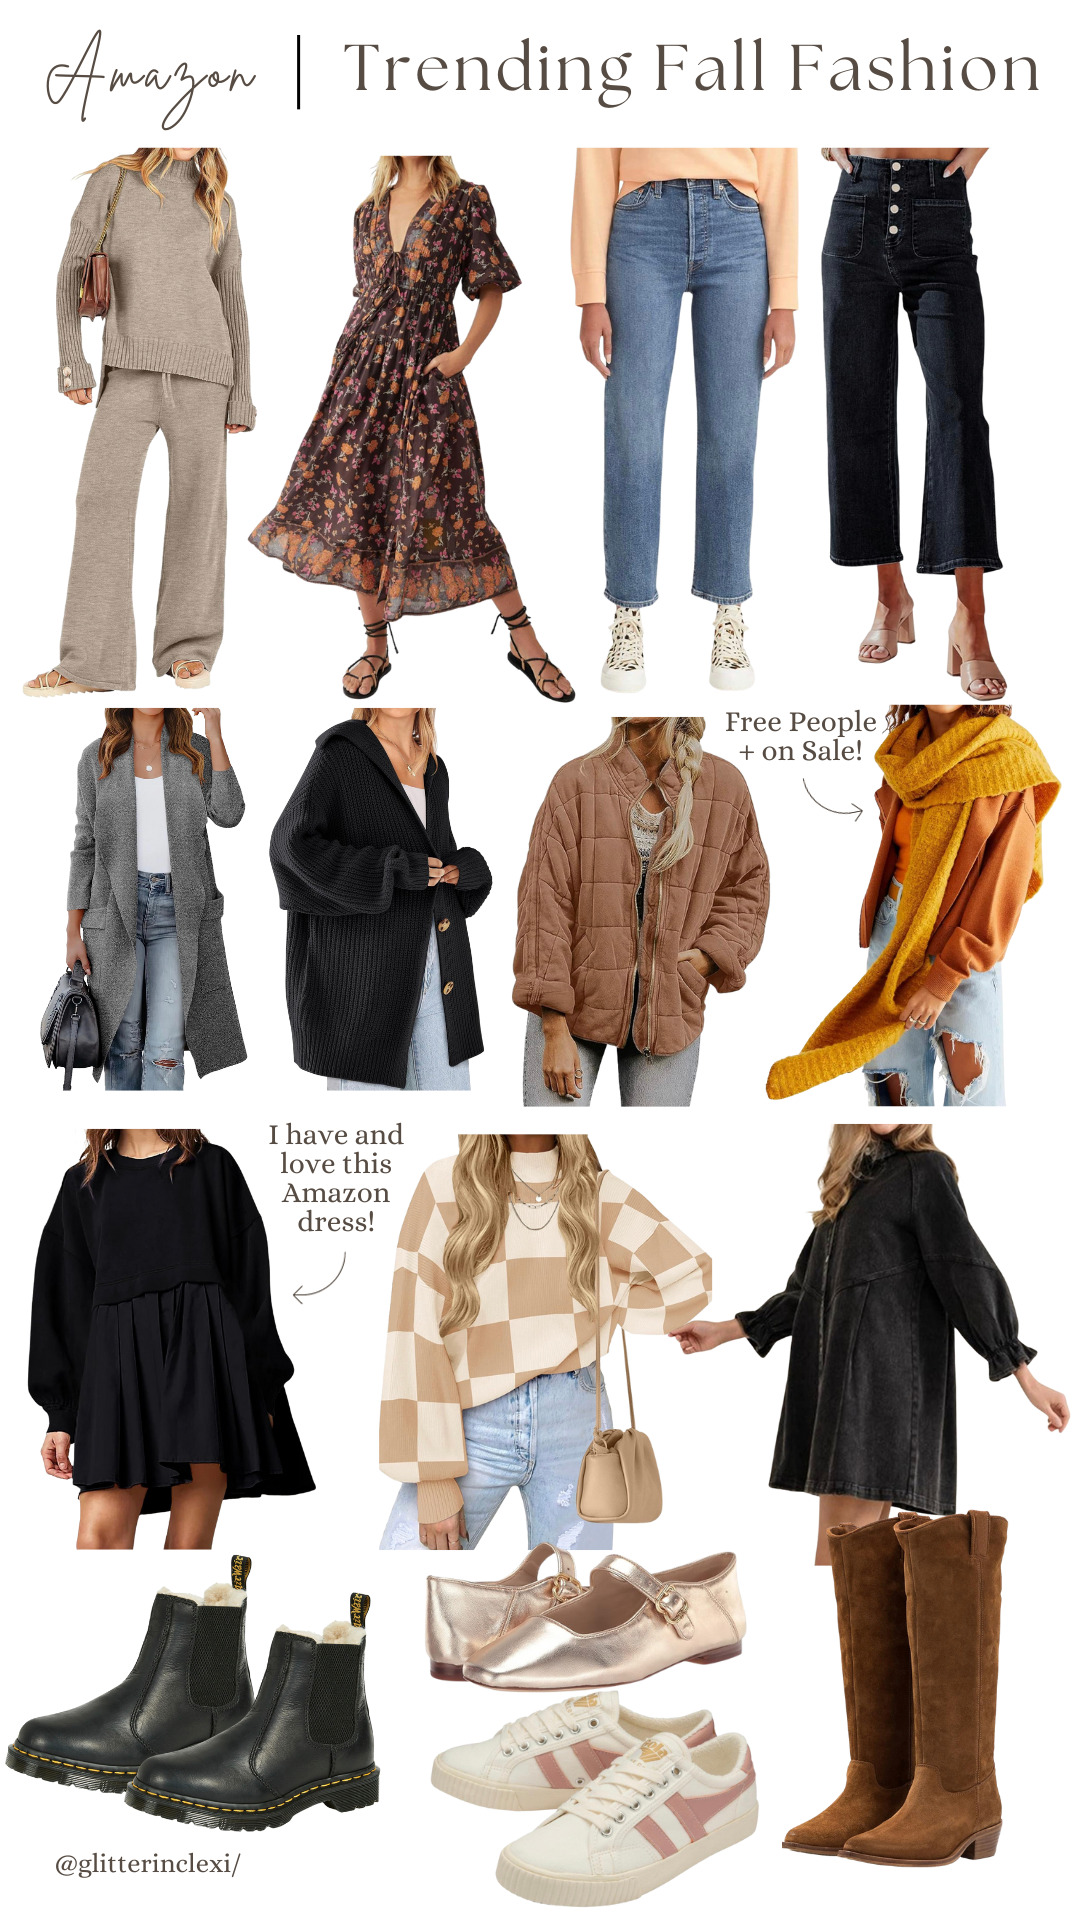 Trending Fall Fashion on Amazon - GLITTERINC.COM